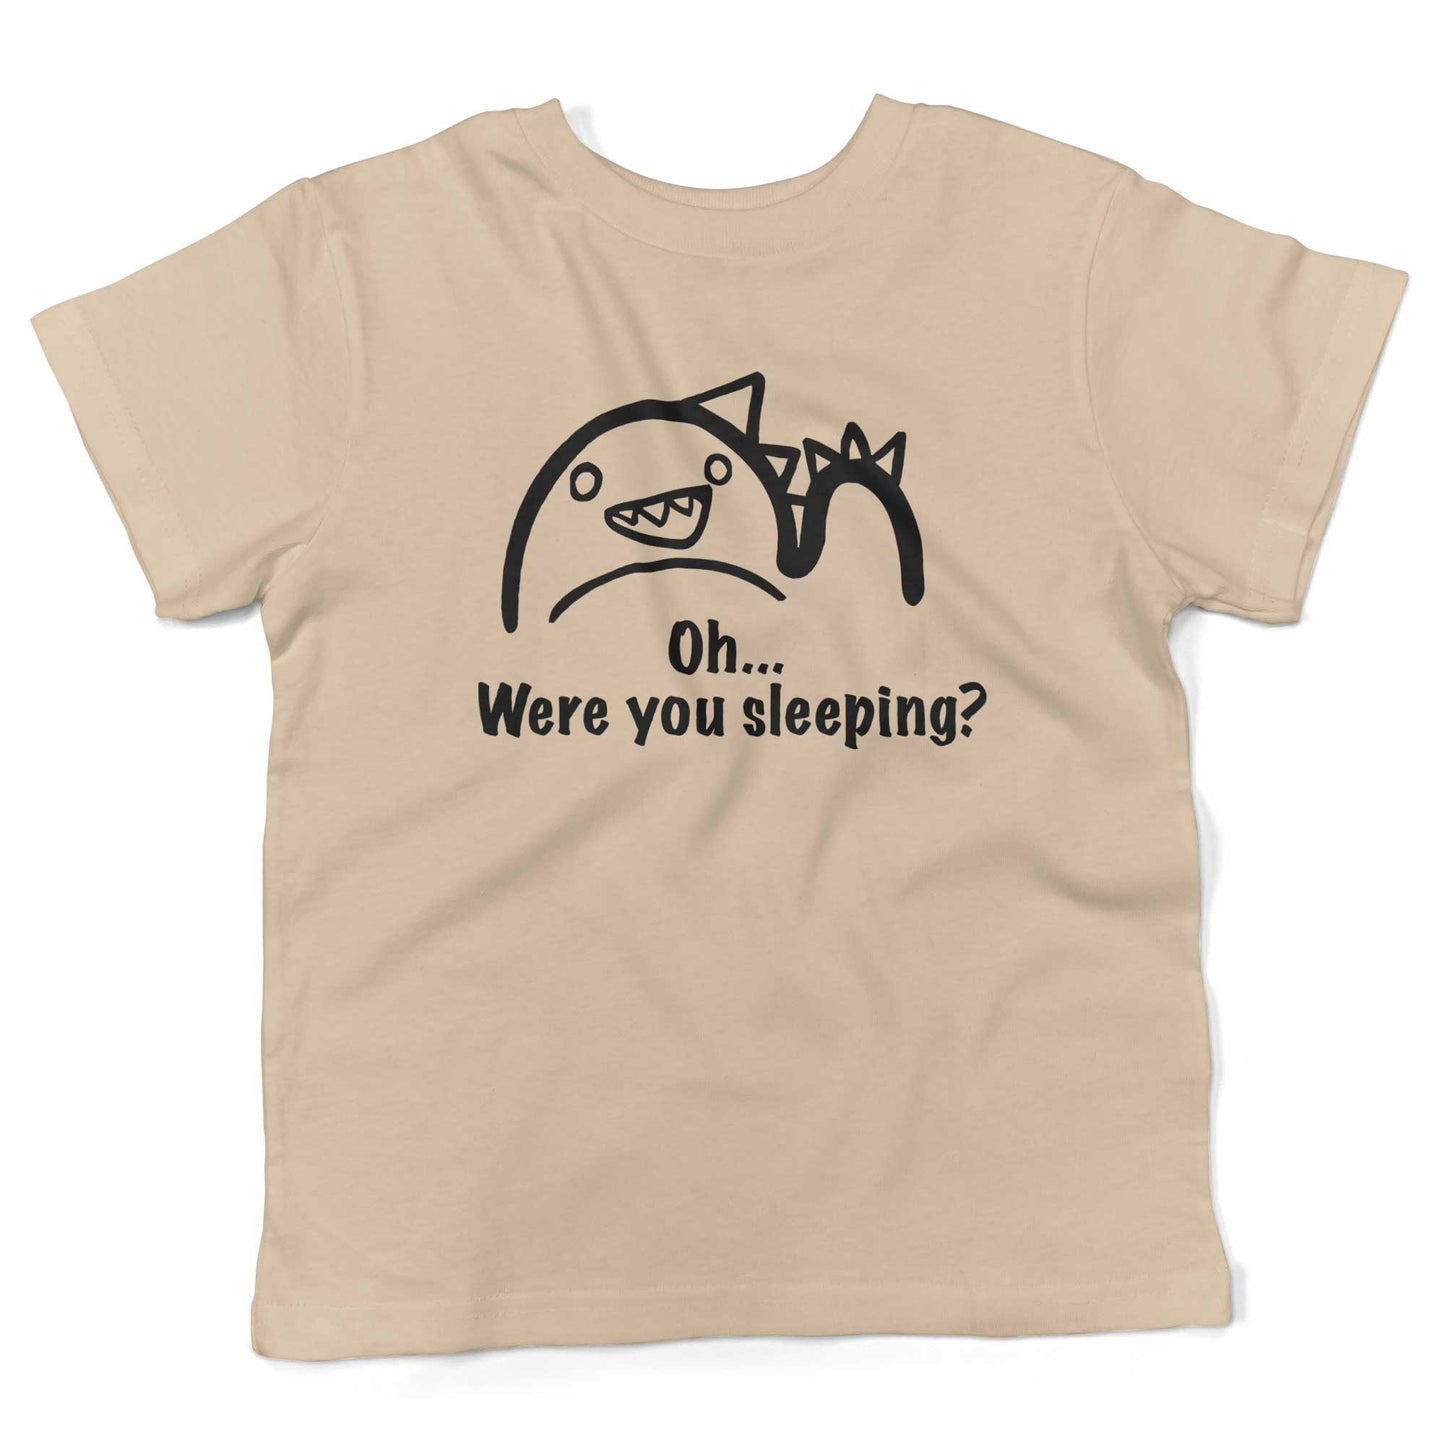 Oh...Were you sleeping? Toddler Shirt-Organic Natural-2T